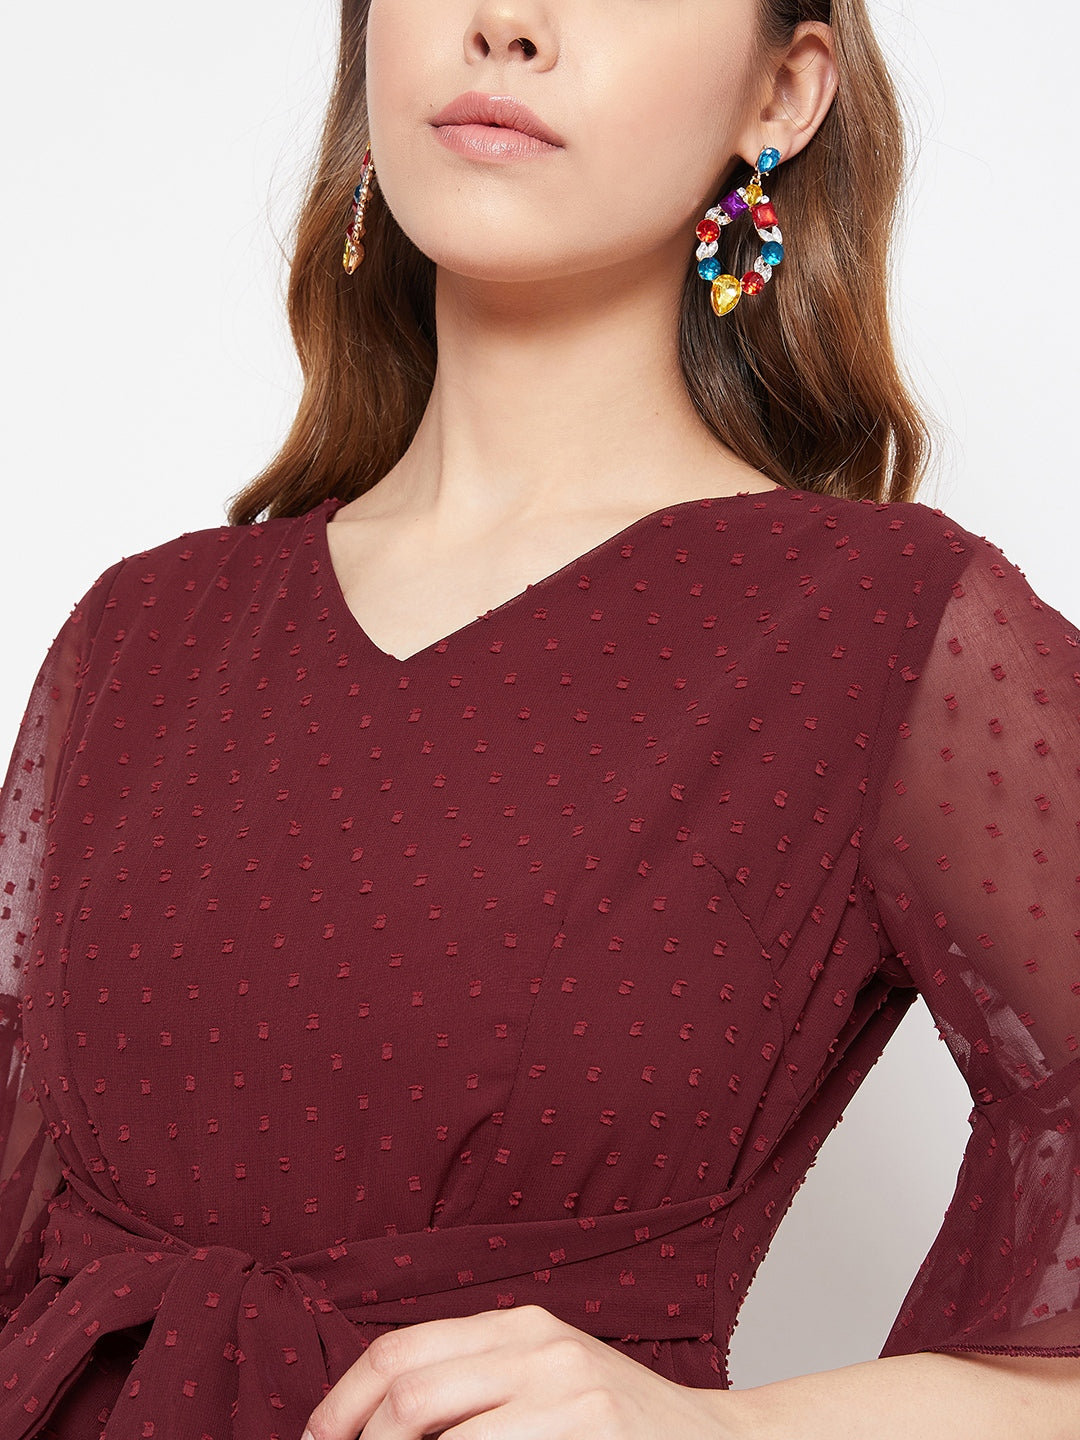 Berrylush Women Solid Maroon Self-Design Patterned V-Neck Layered Fit & Flare Mini Dress